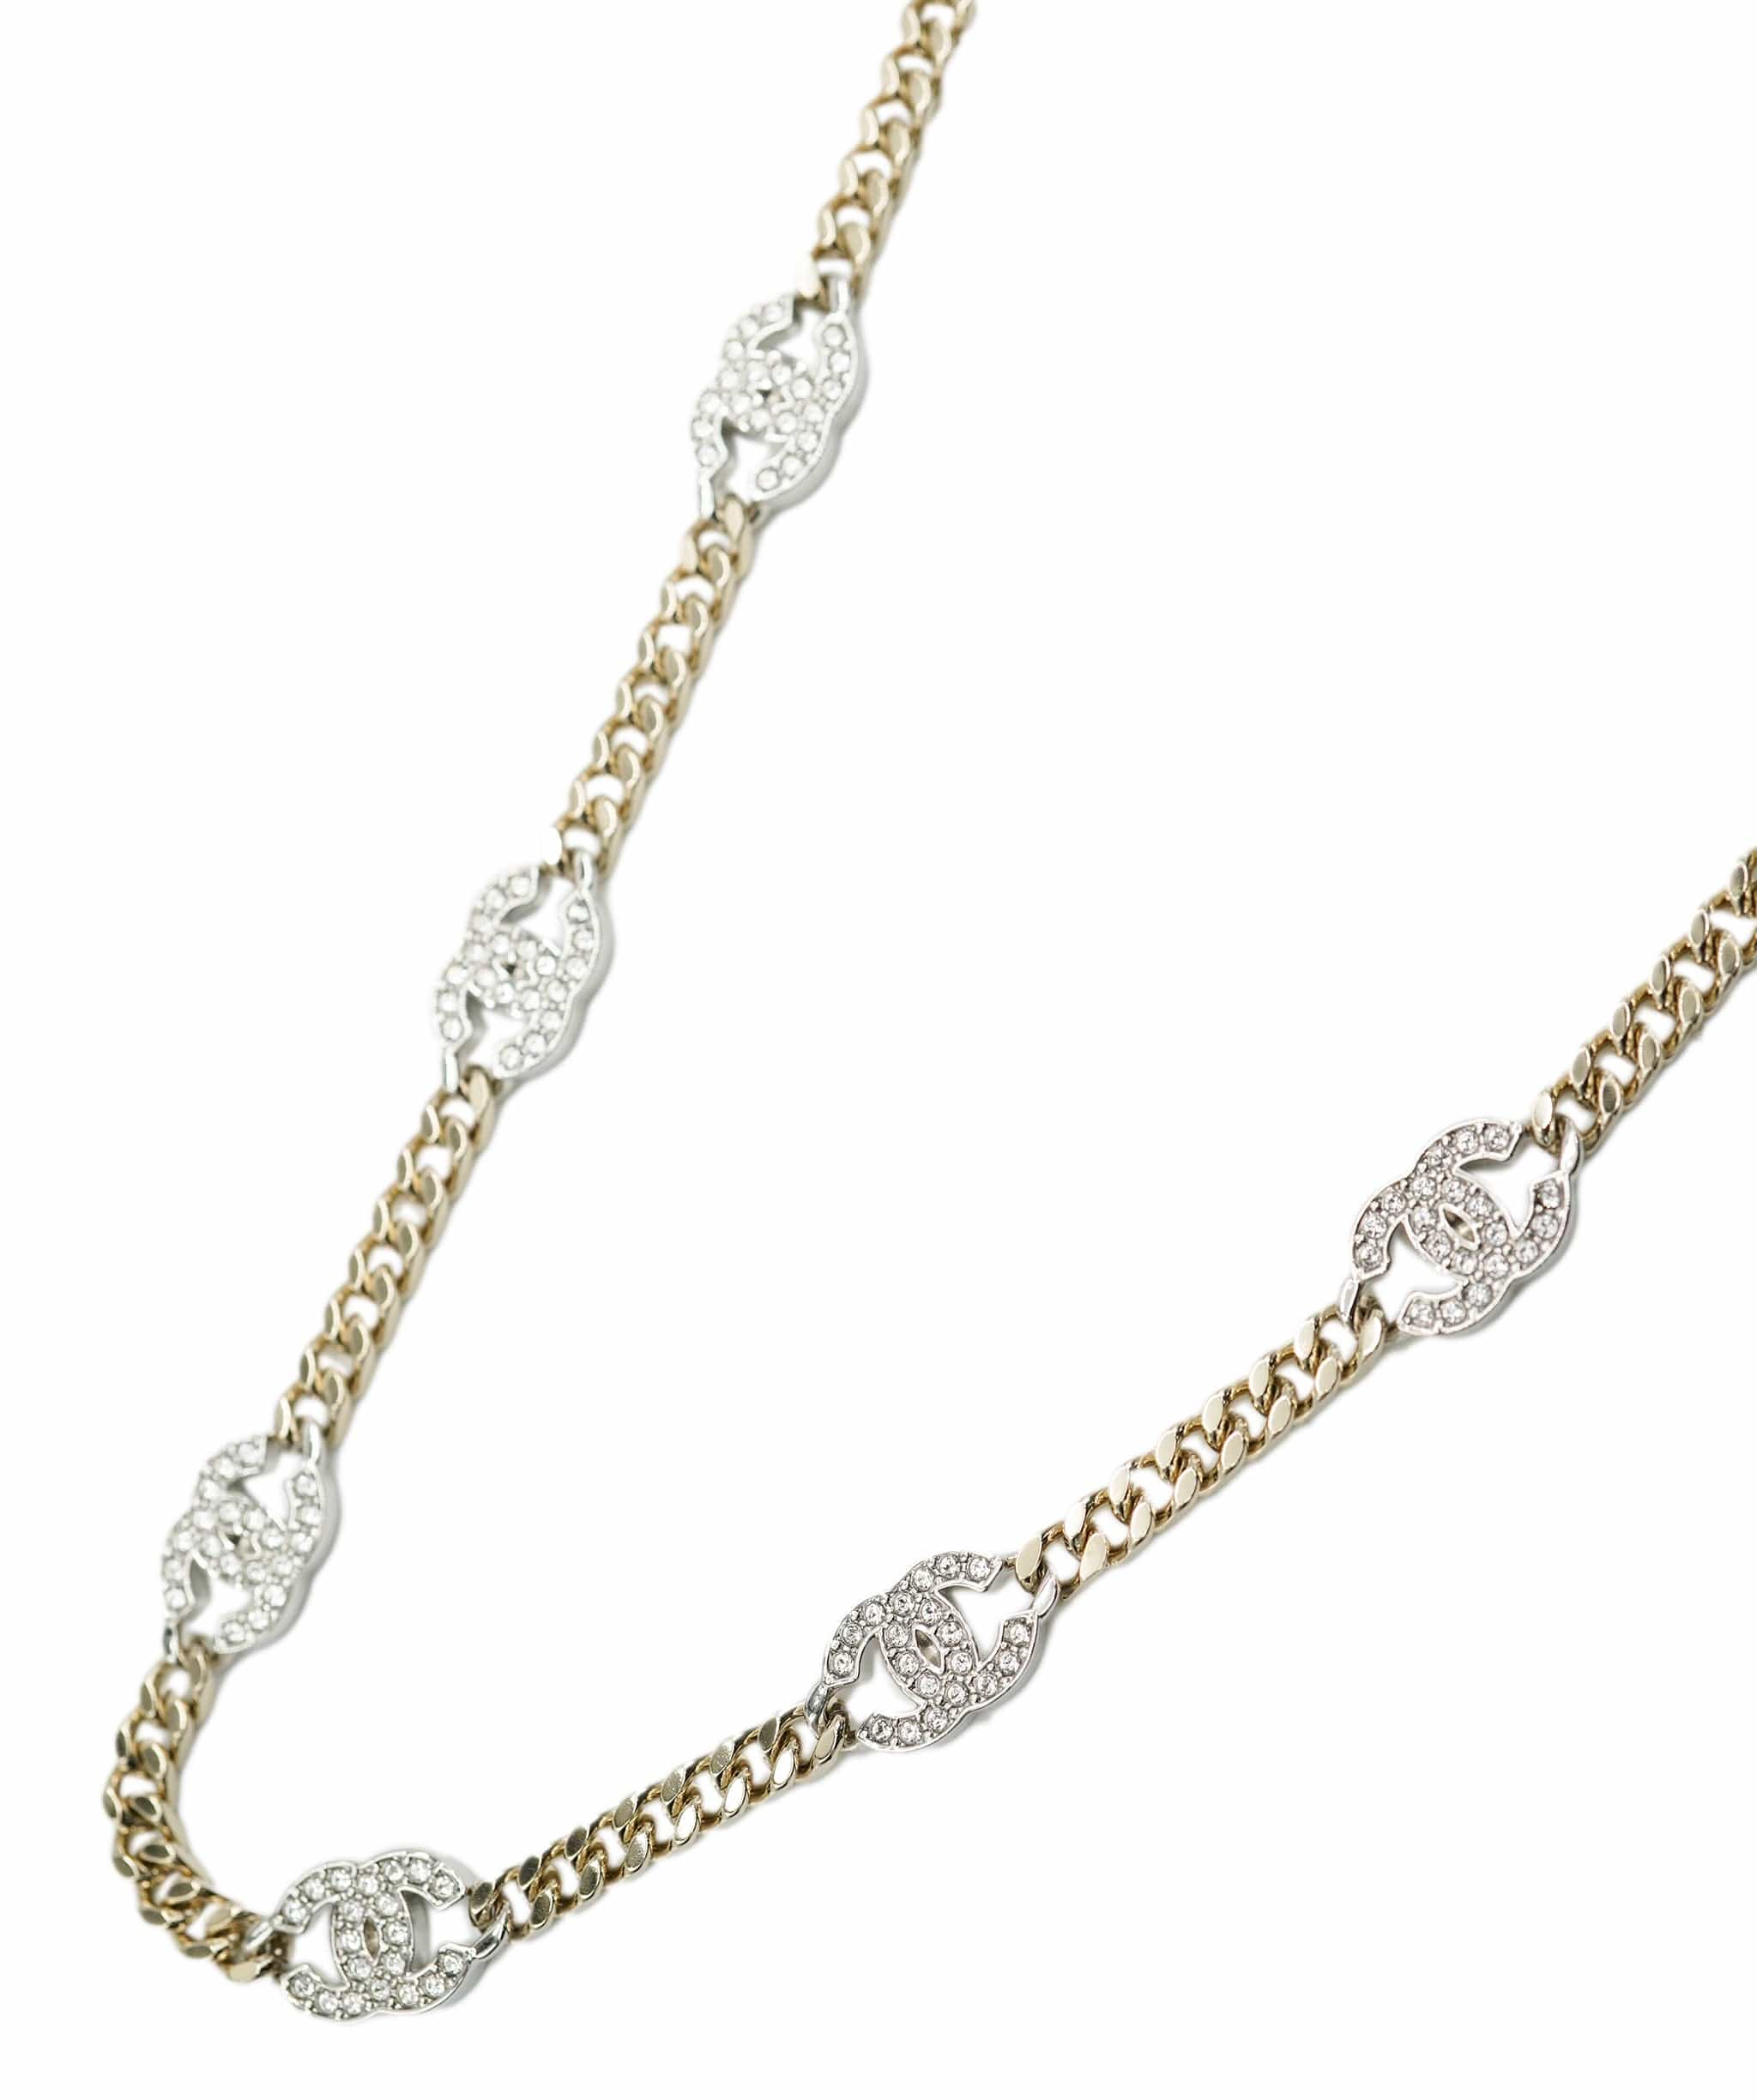 Chanel Chanel champagne gold CC diamante chain belt 96cm - AJC0659